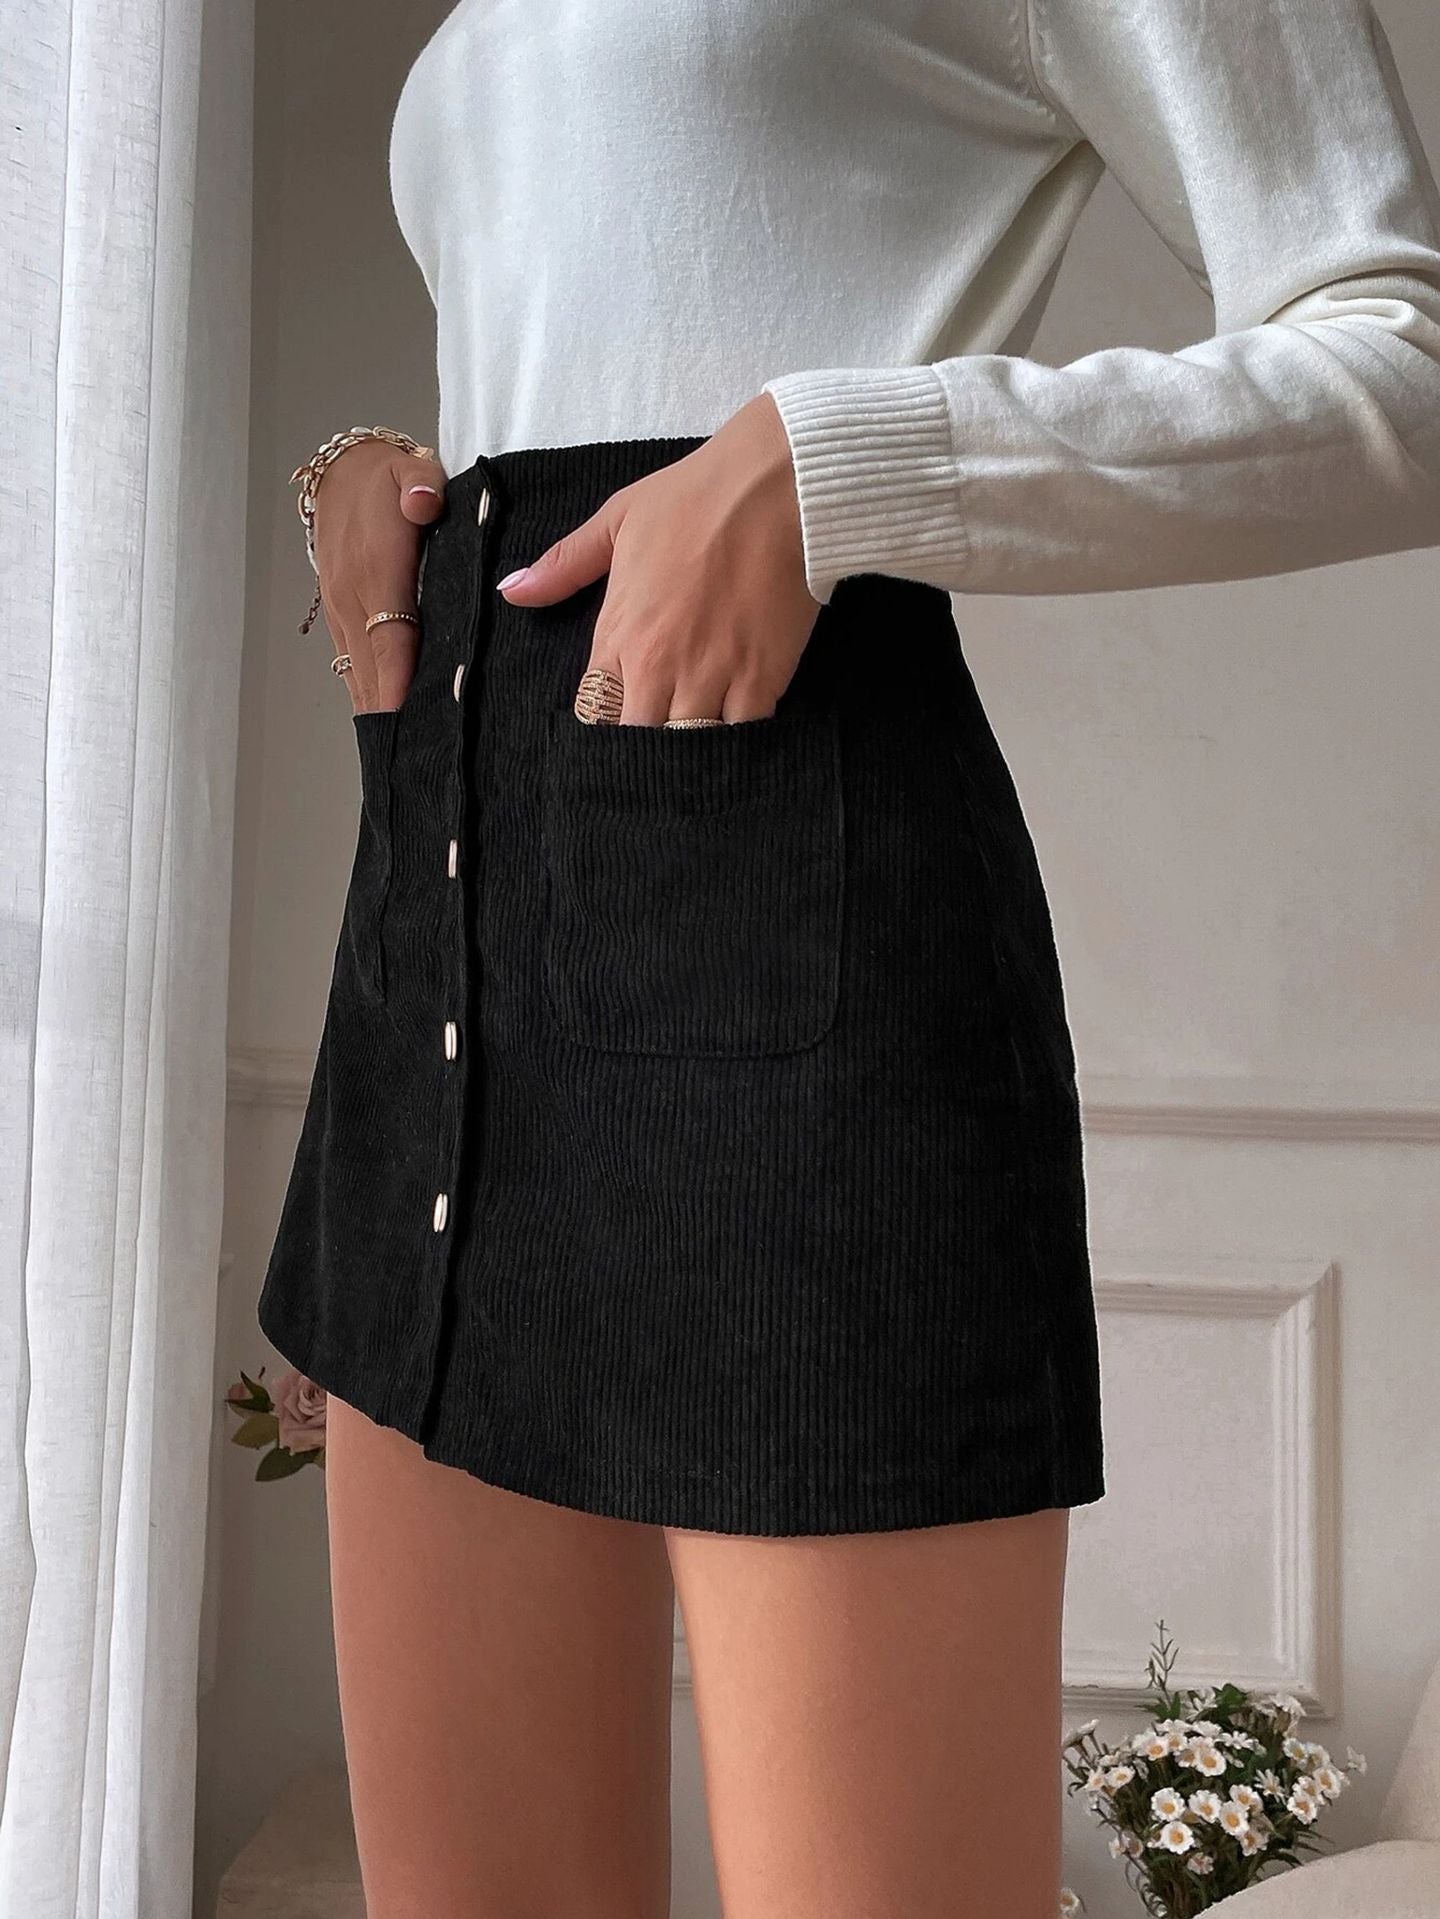 Corduroy Slim Fit Skirt skirts malbusaat.co.uk